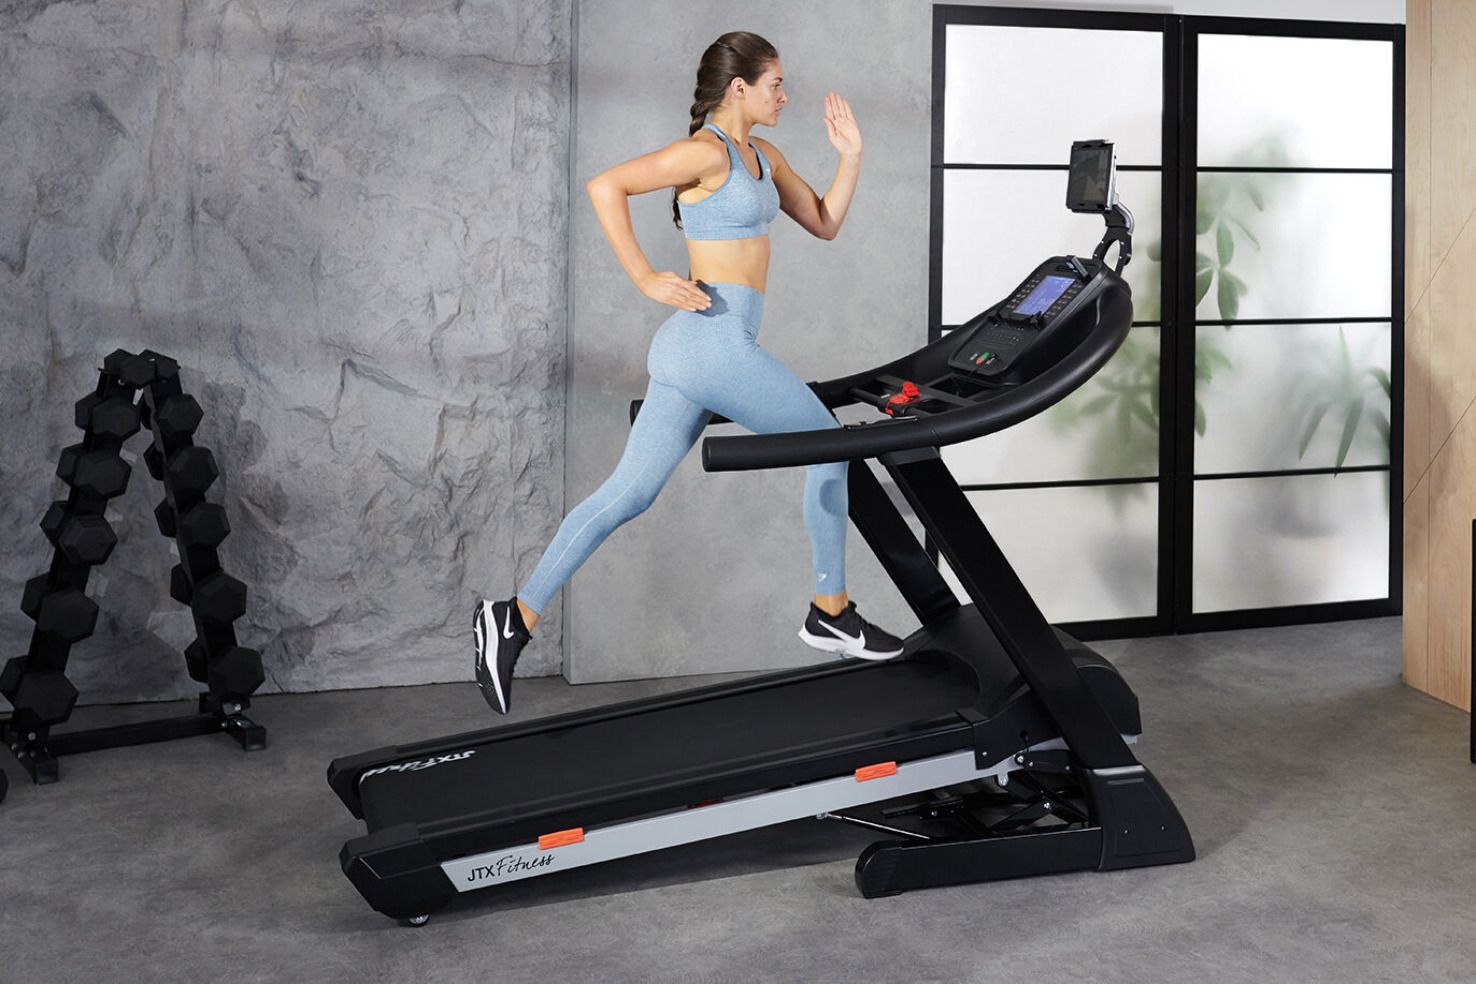 Woman demonstrating a new treadmill.